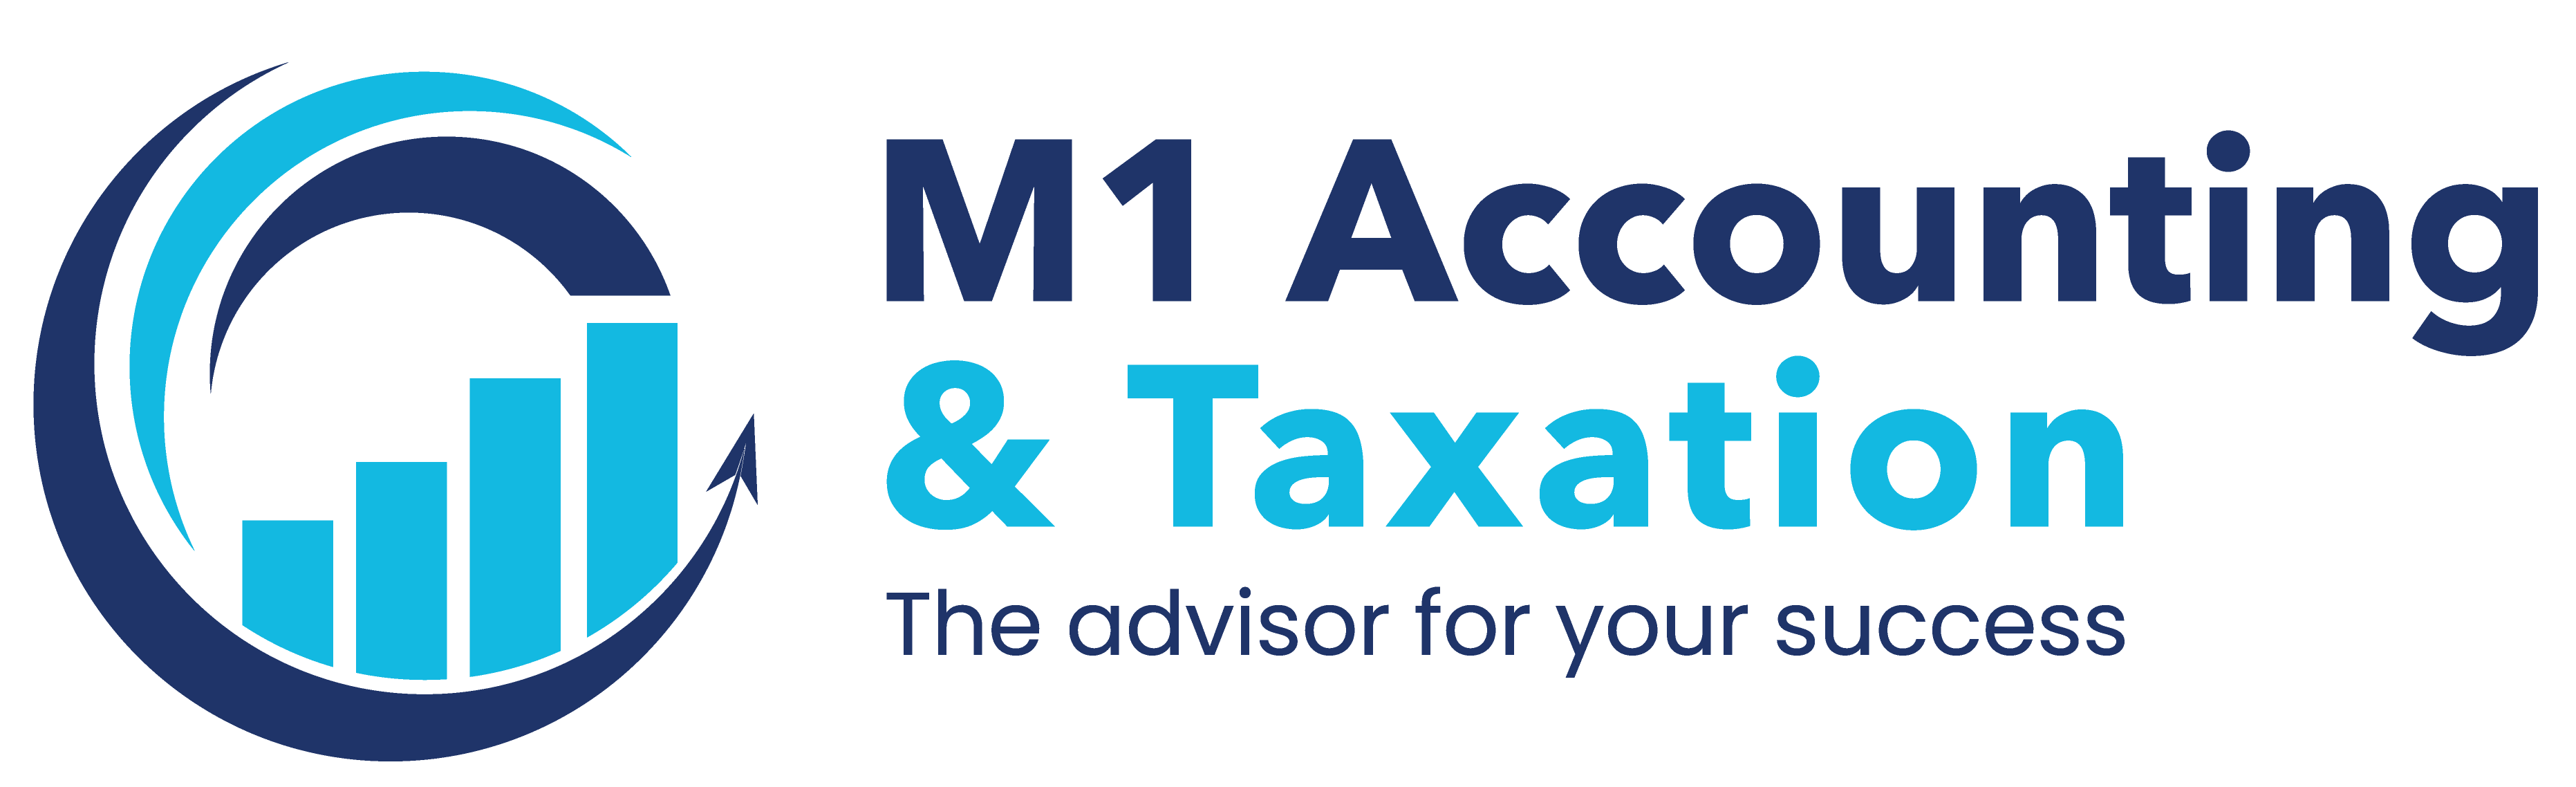 M1 Accounting logo